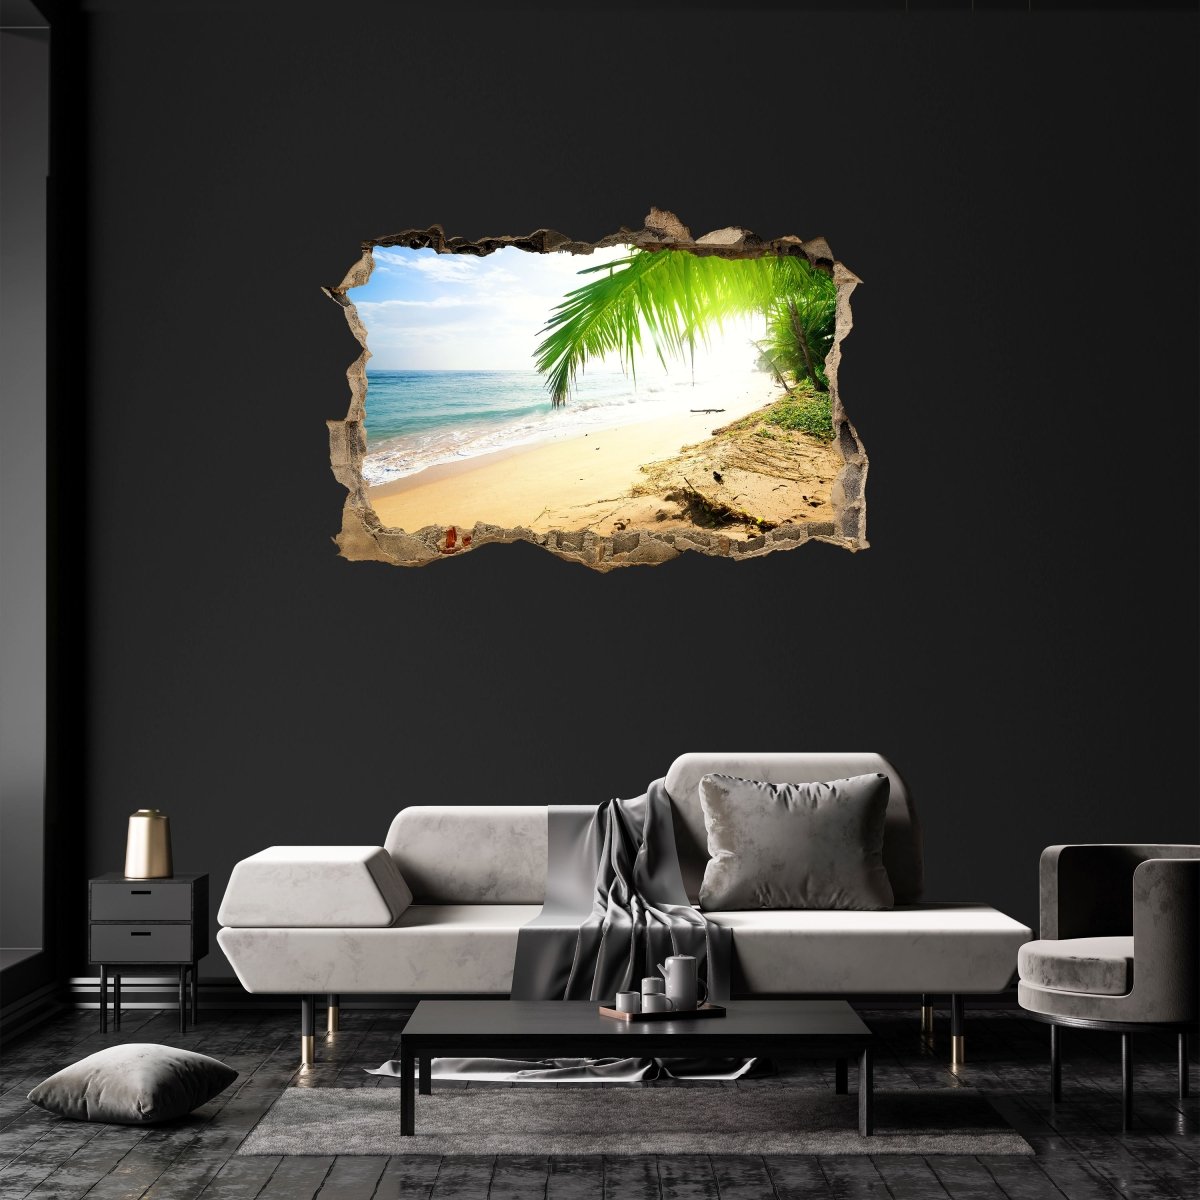 3D wall sticker beach in the sun, palm trees, sea, sand - Wall Decal M1232